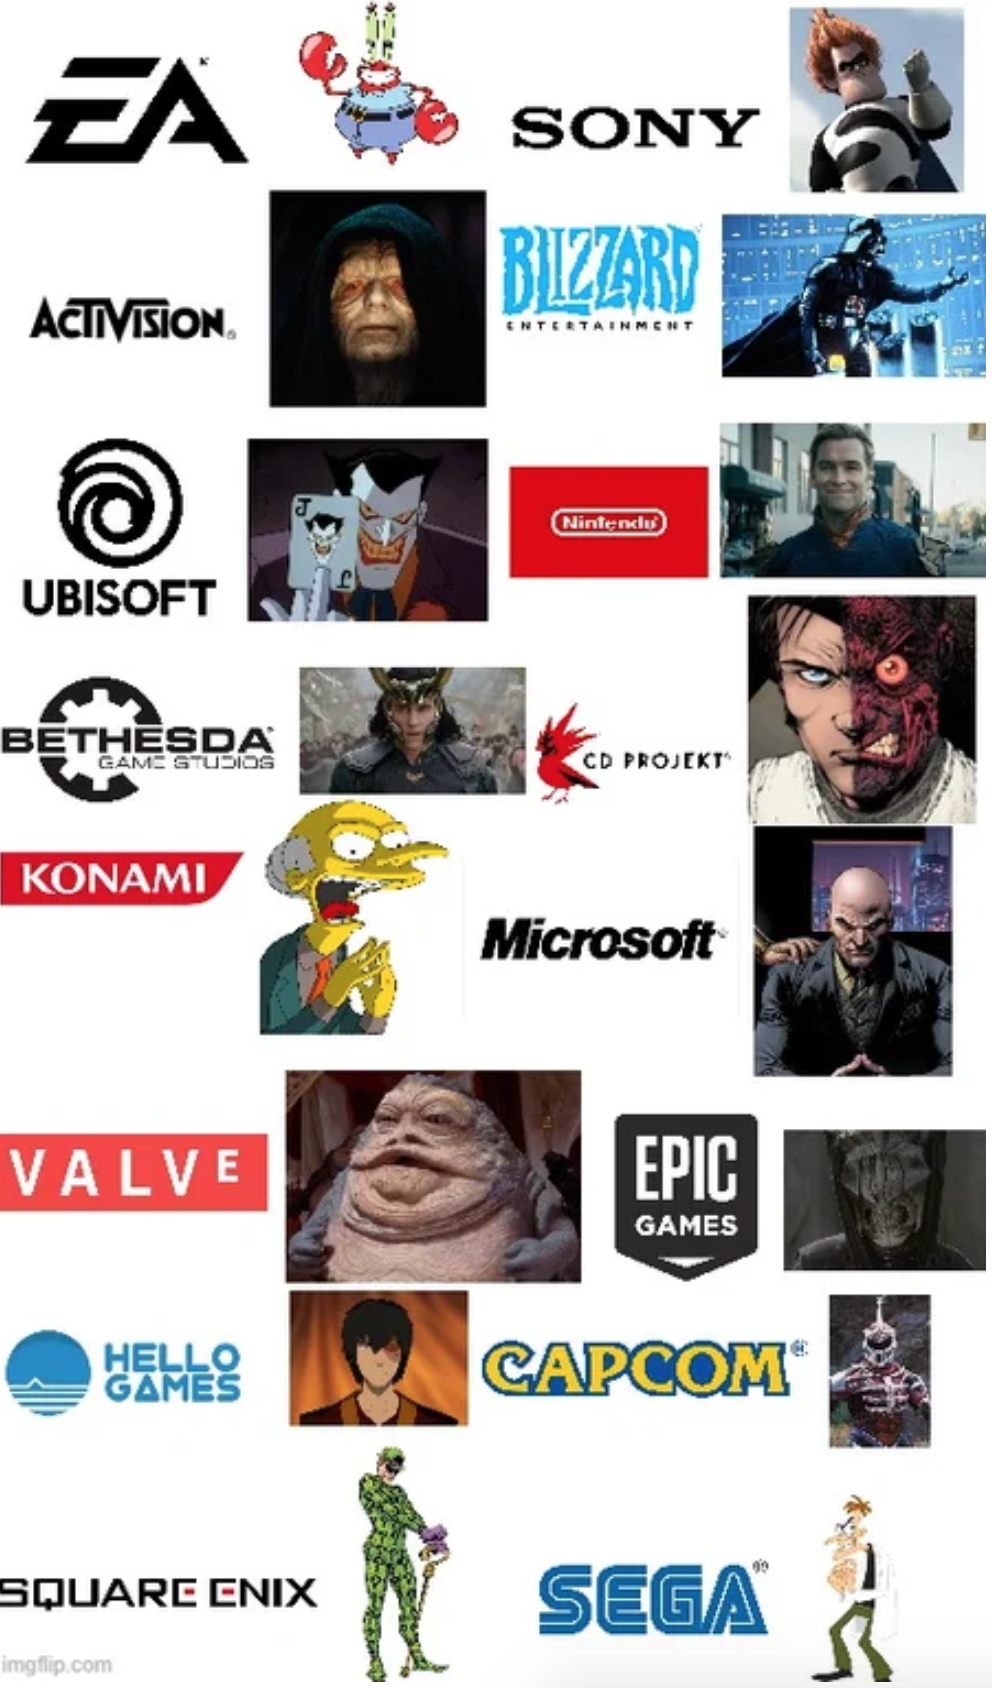 funny gaming memes - graphic design - 3 Ea Sony Bizzard Activision conten Ubisoft Bethesda Cd Projekt Konami Microsoft Valve Epic Games Hello Games Capcom Square Enix Sega